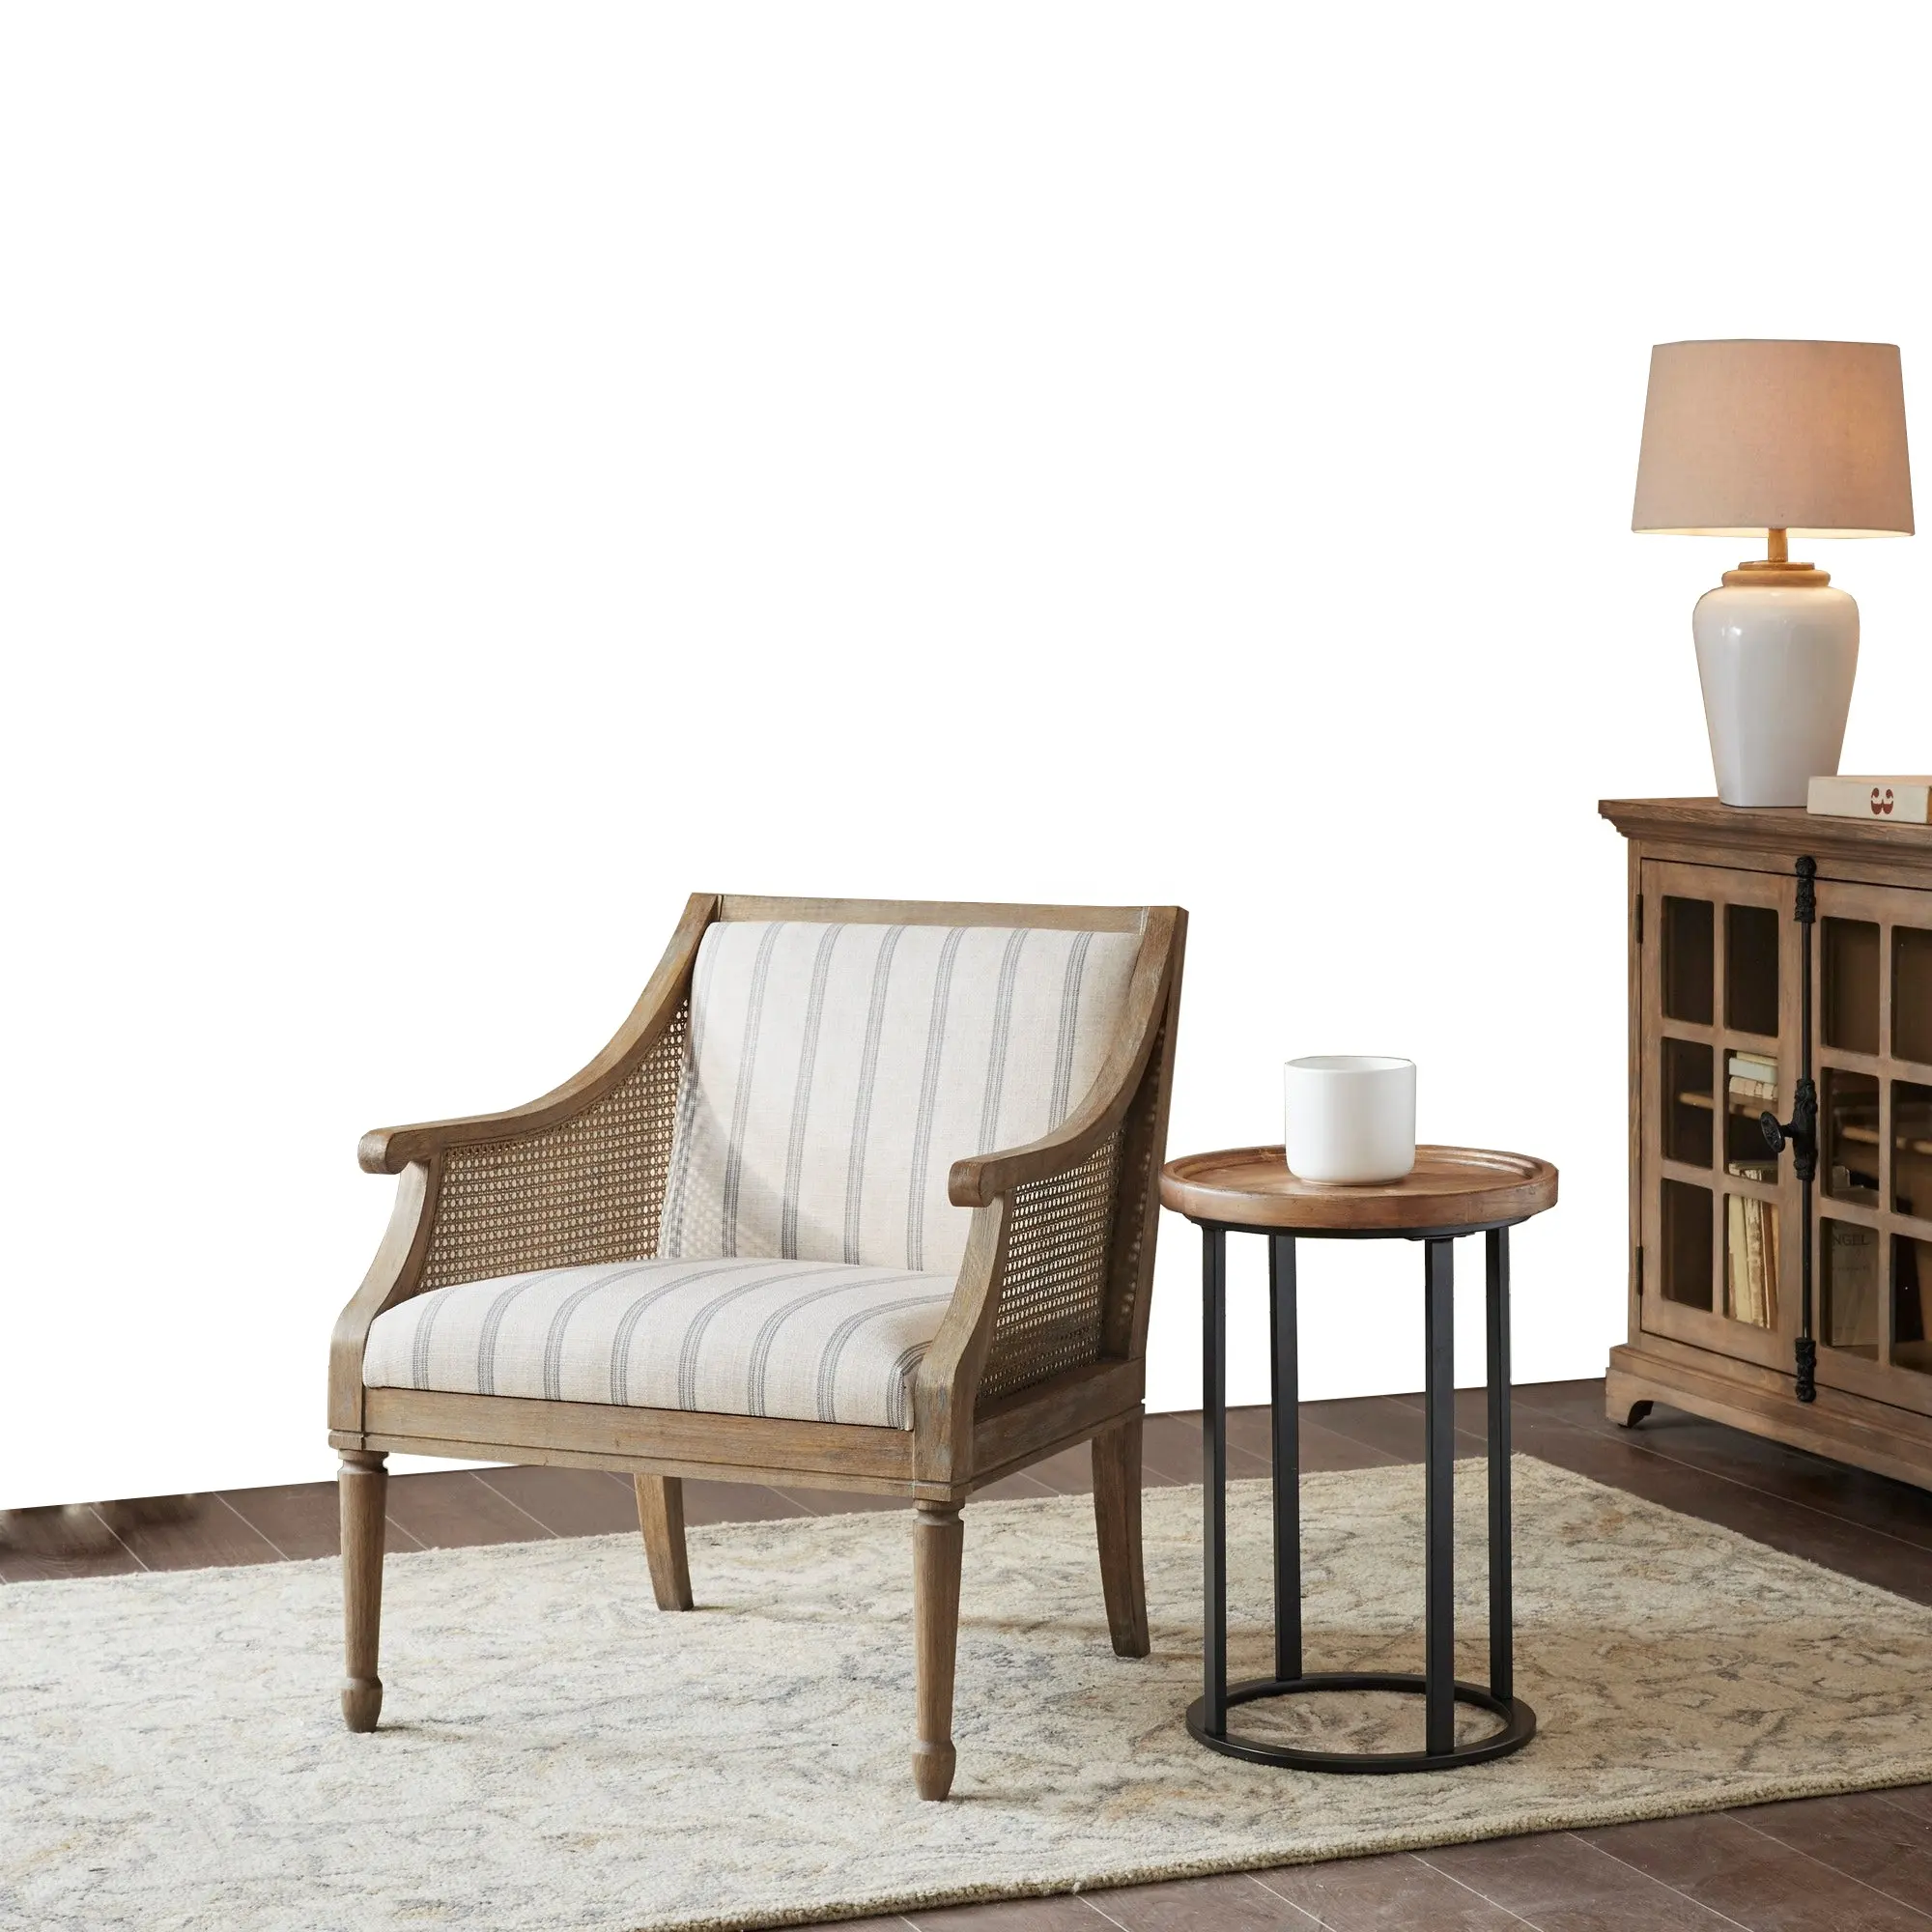 Neuankömmling Antikes Design 5 Sterne Lounge Hotels tuhl Akzent Cane Holz möbel